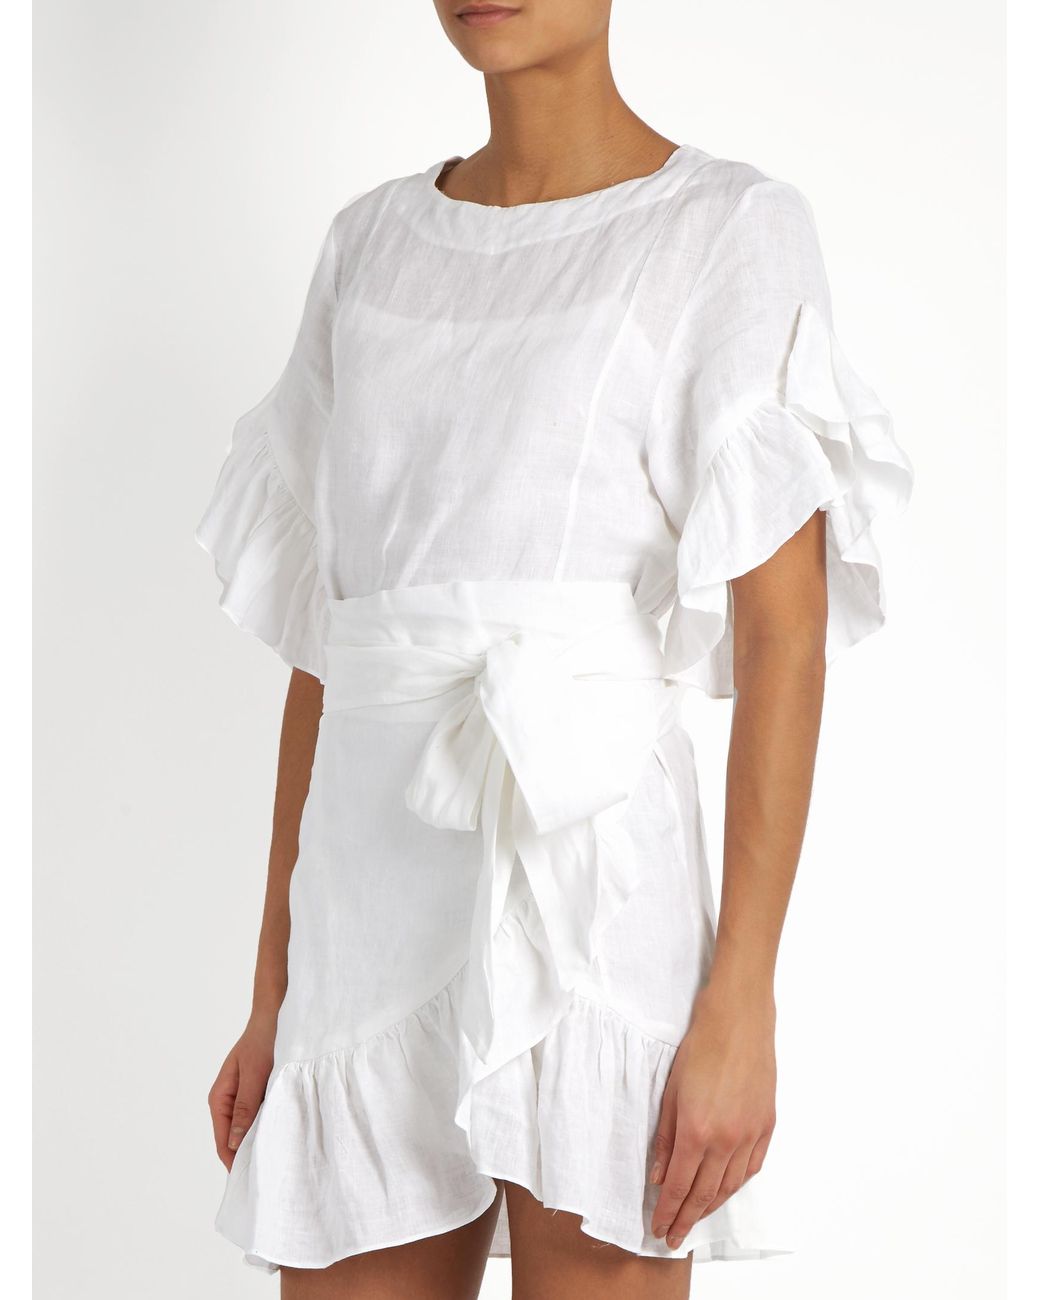 Étoile Marant Delicia Ruffled Dress in White | Lyst